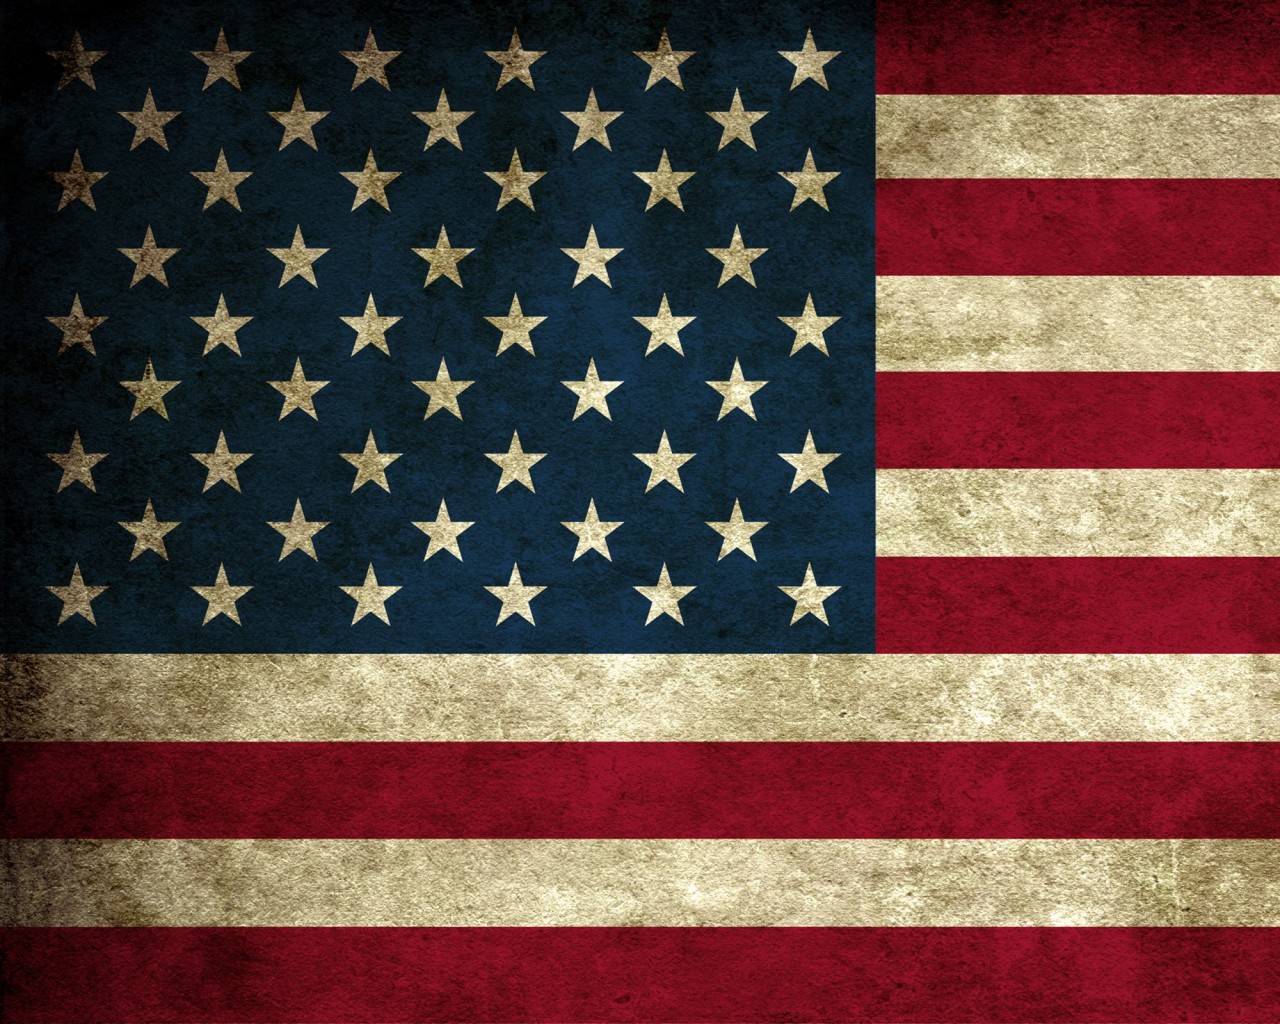 Американский флаг, флаг США обои